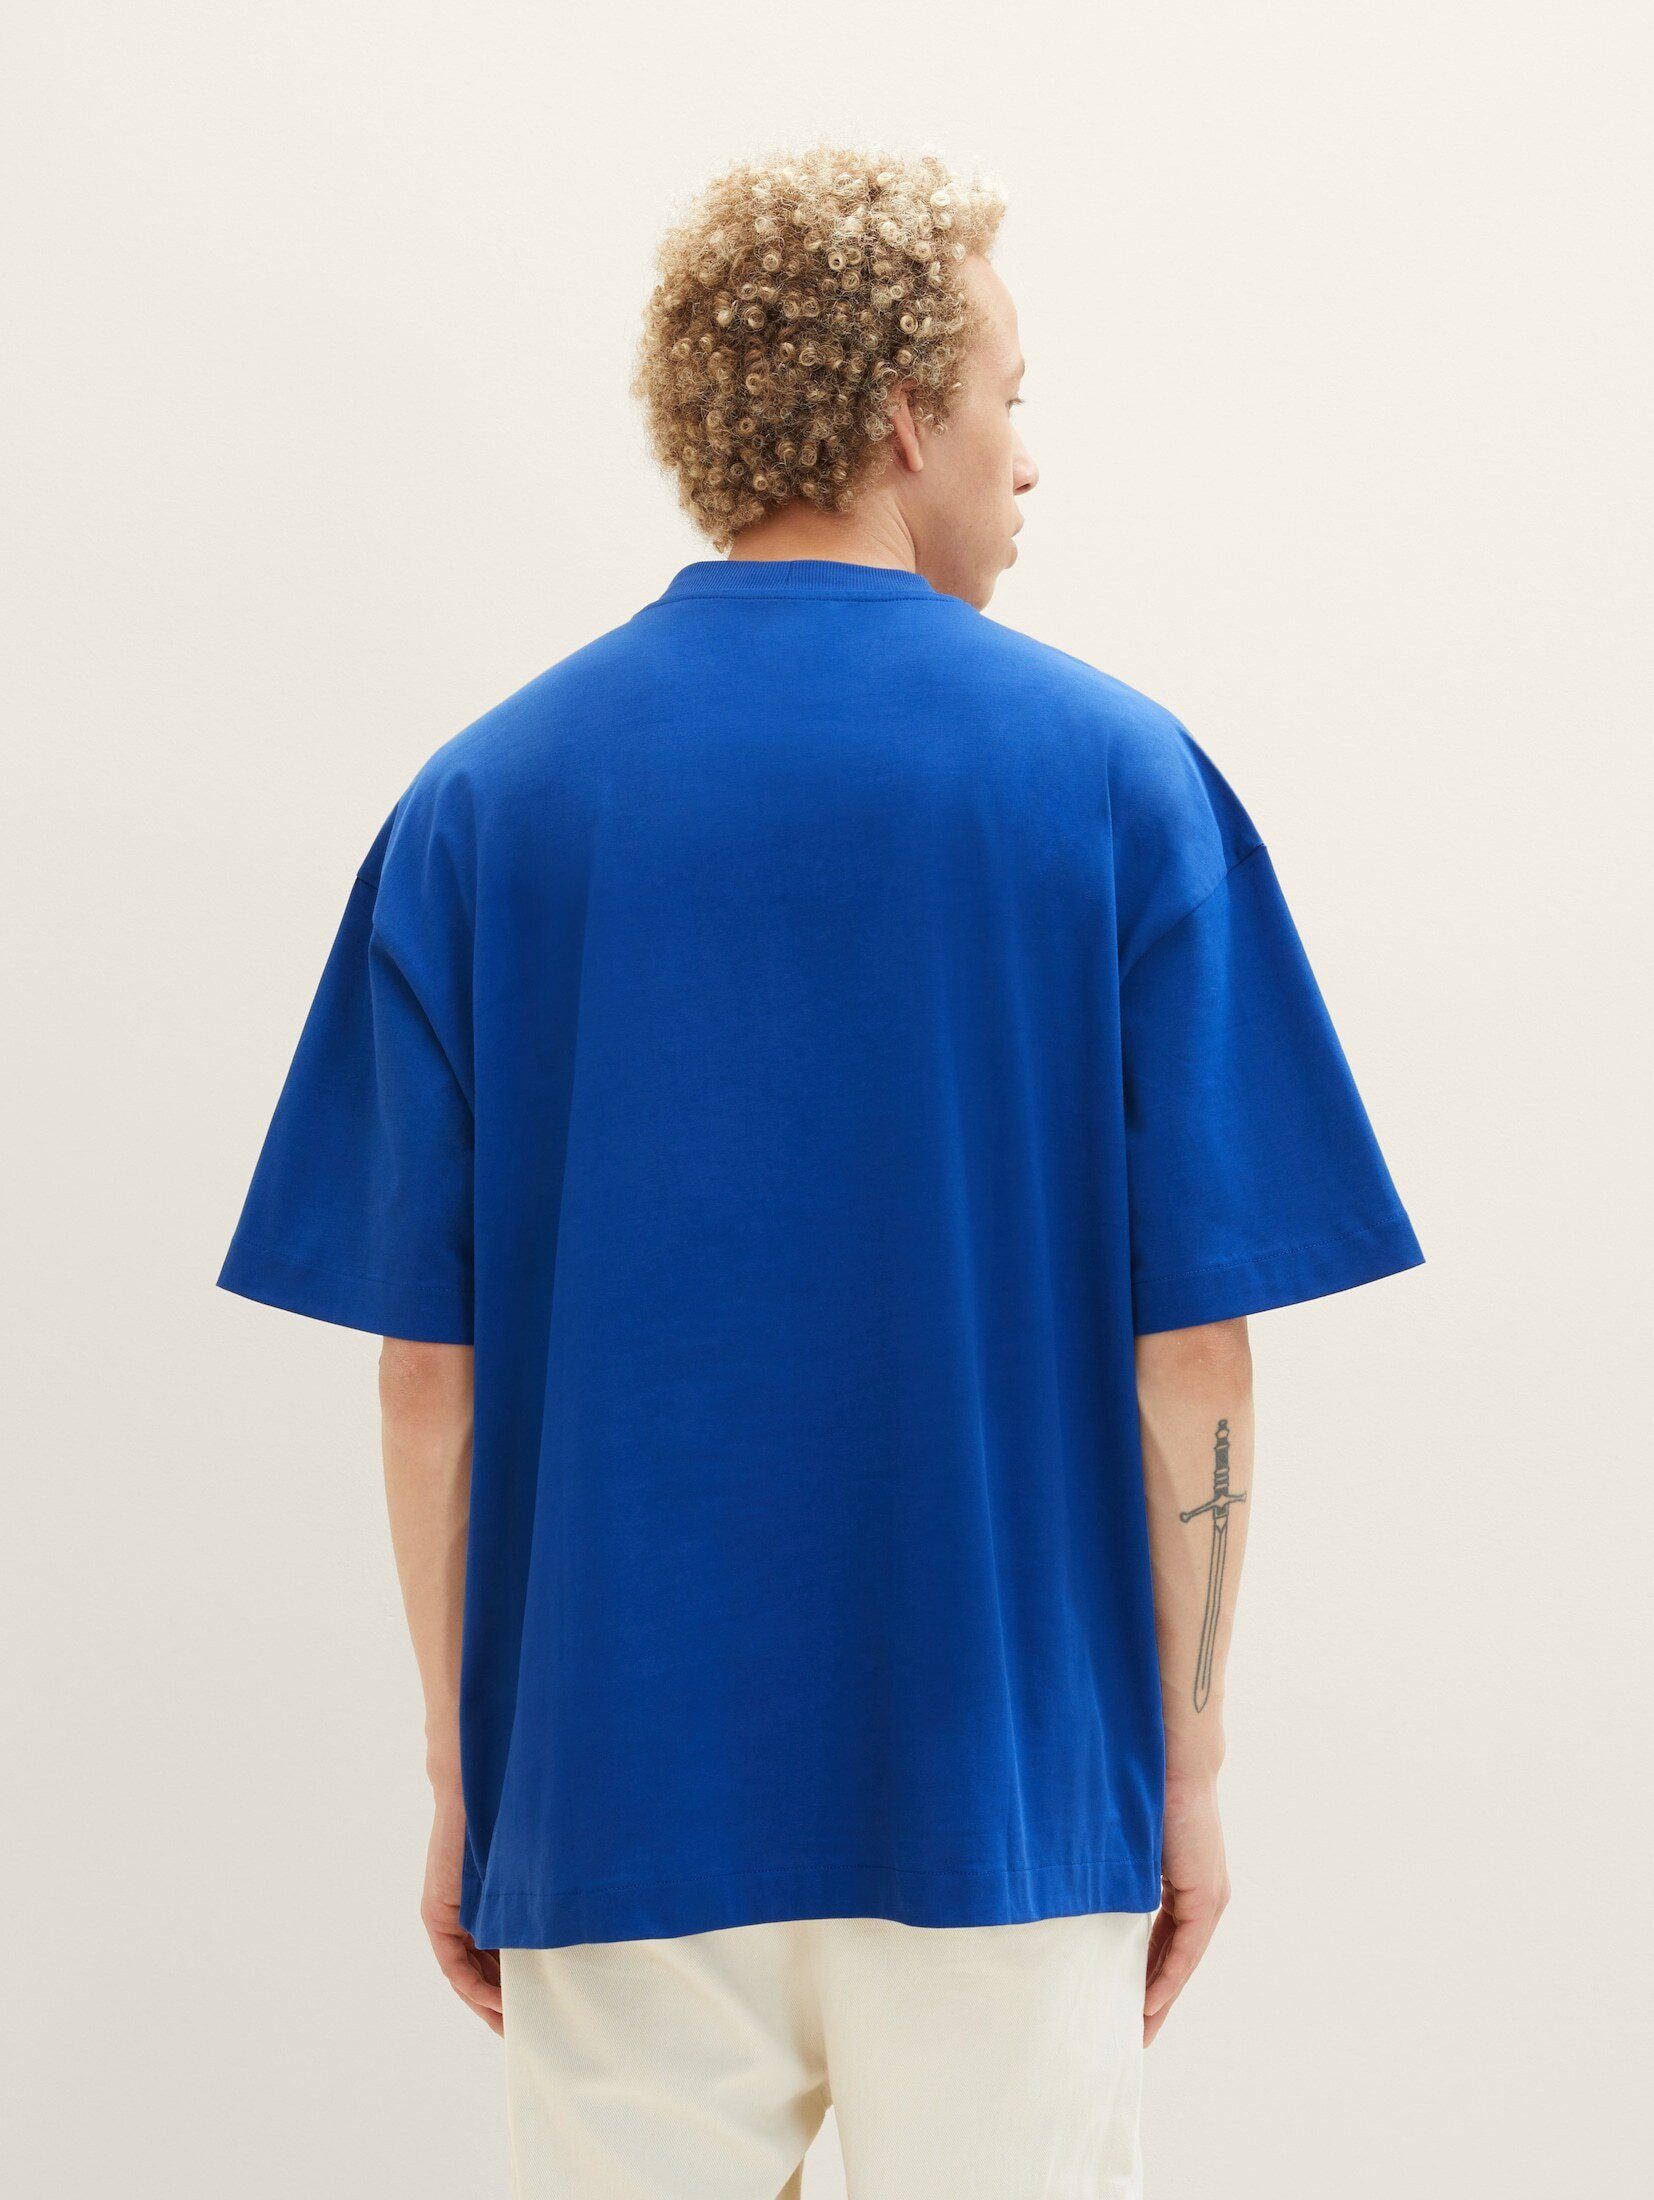 TOM TAILOR Denim T-Shirt blue mit T-Shirt royal shiny Applikation Oversized